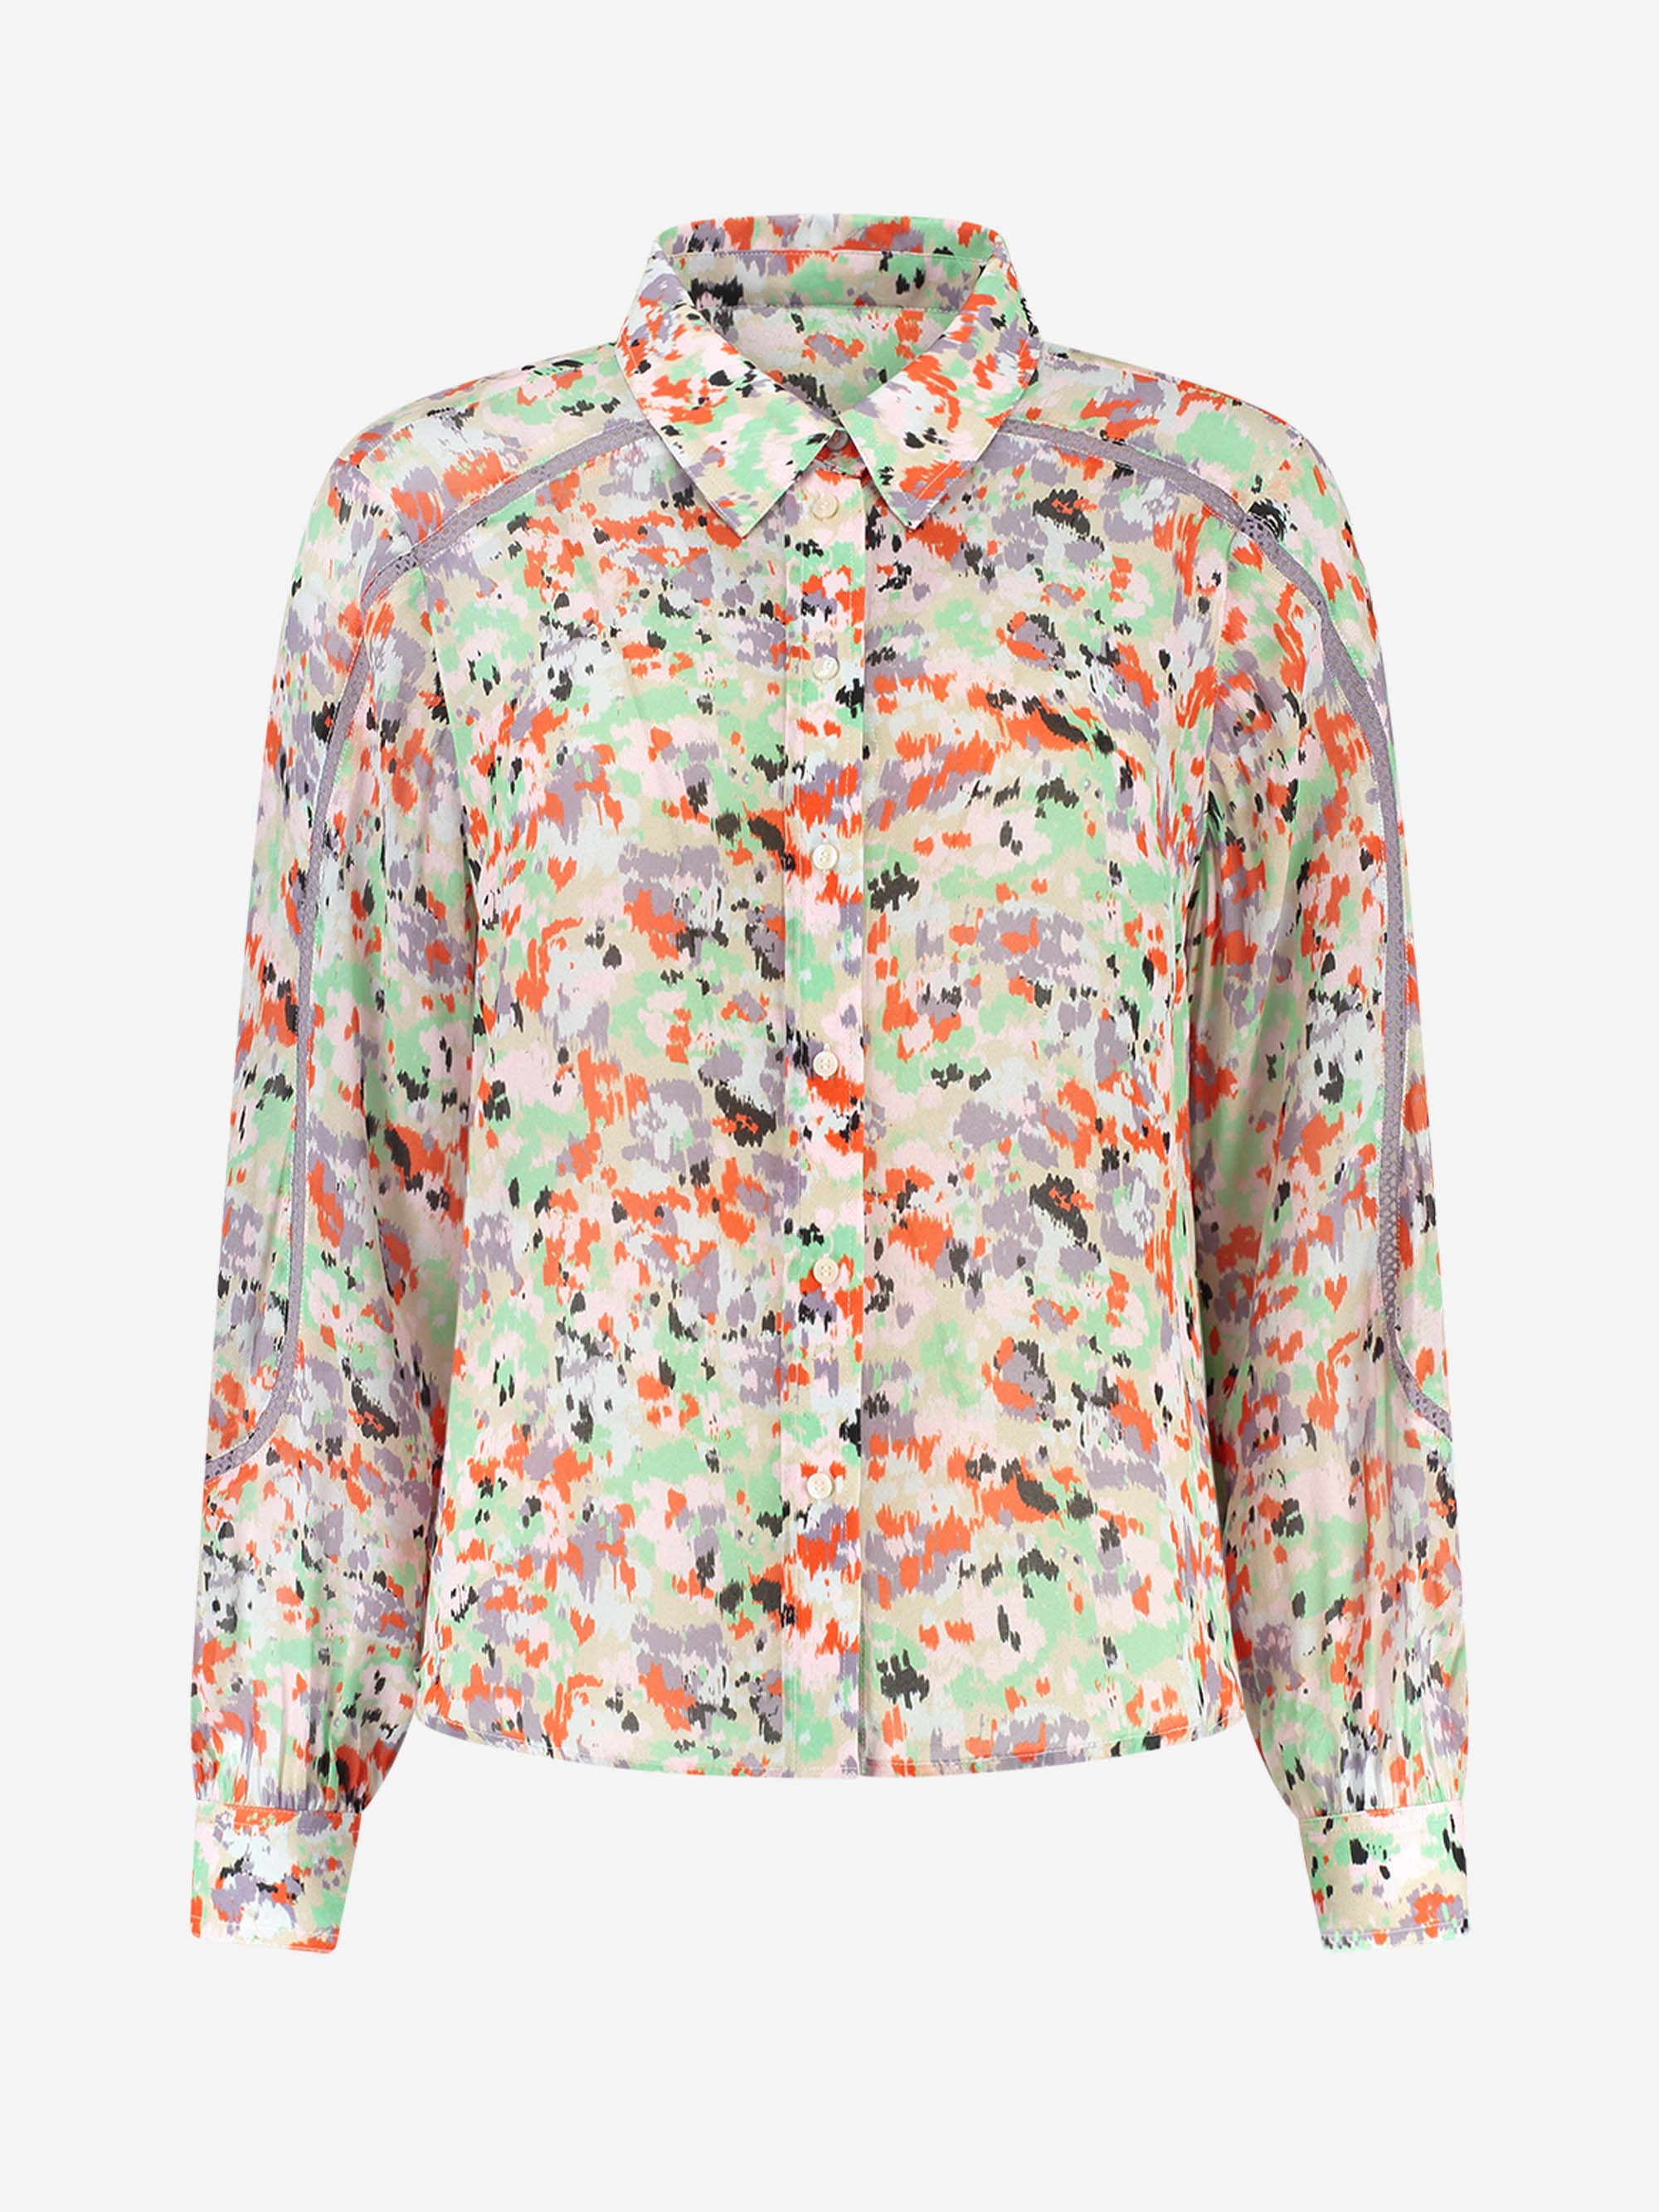 Flower print blouse 